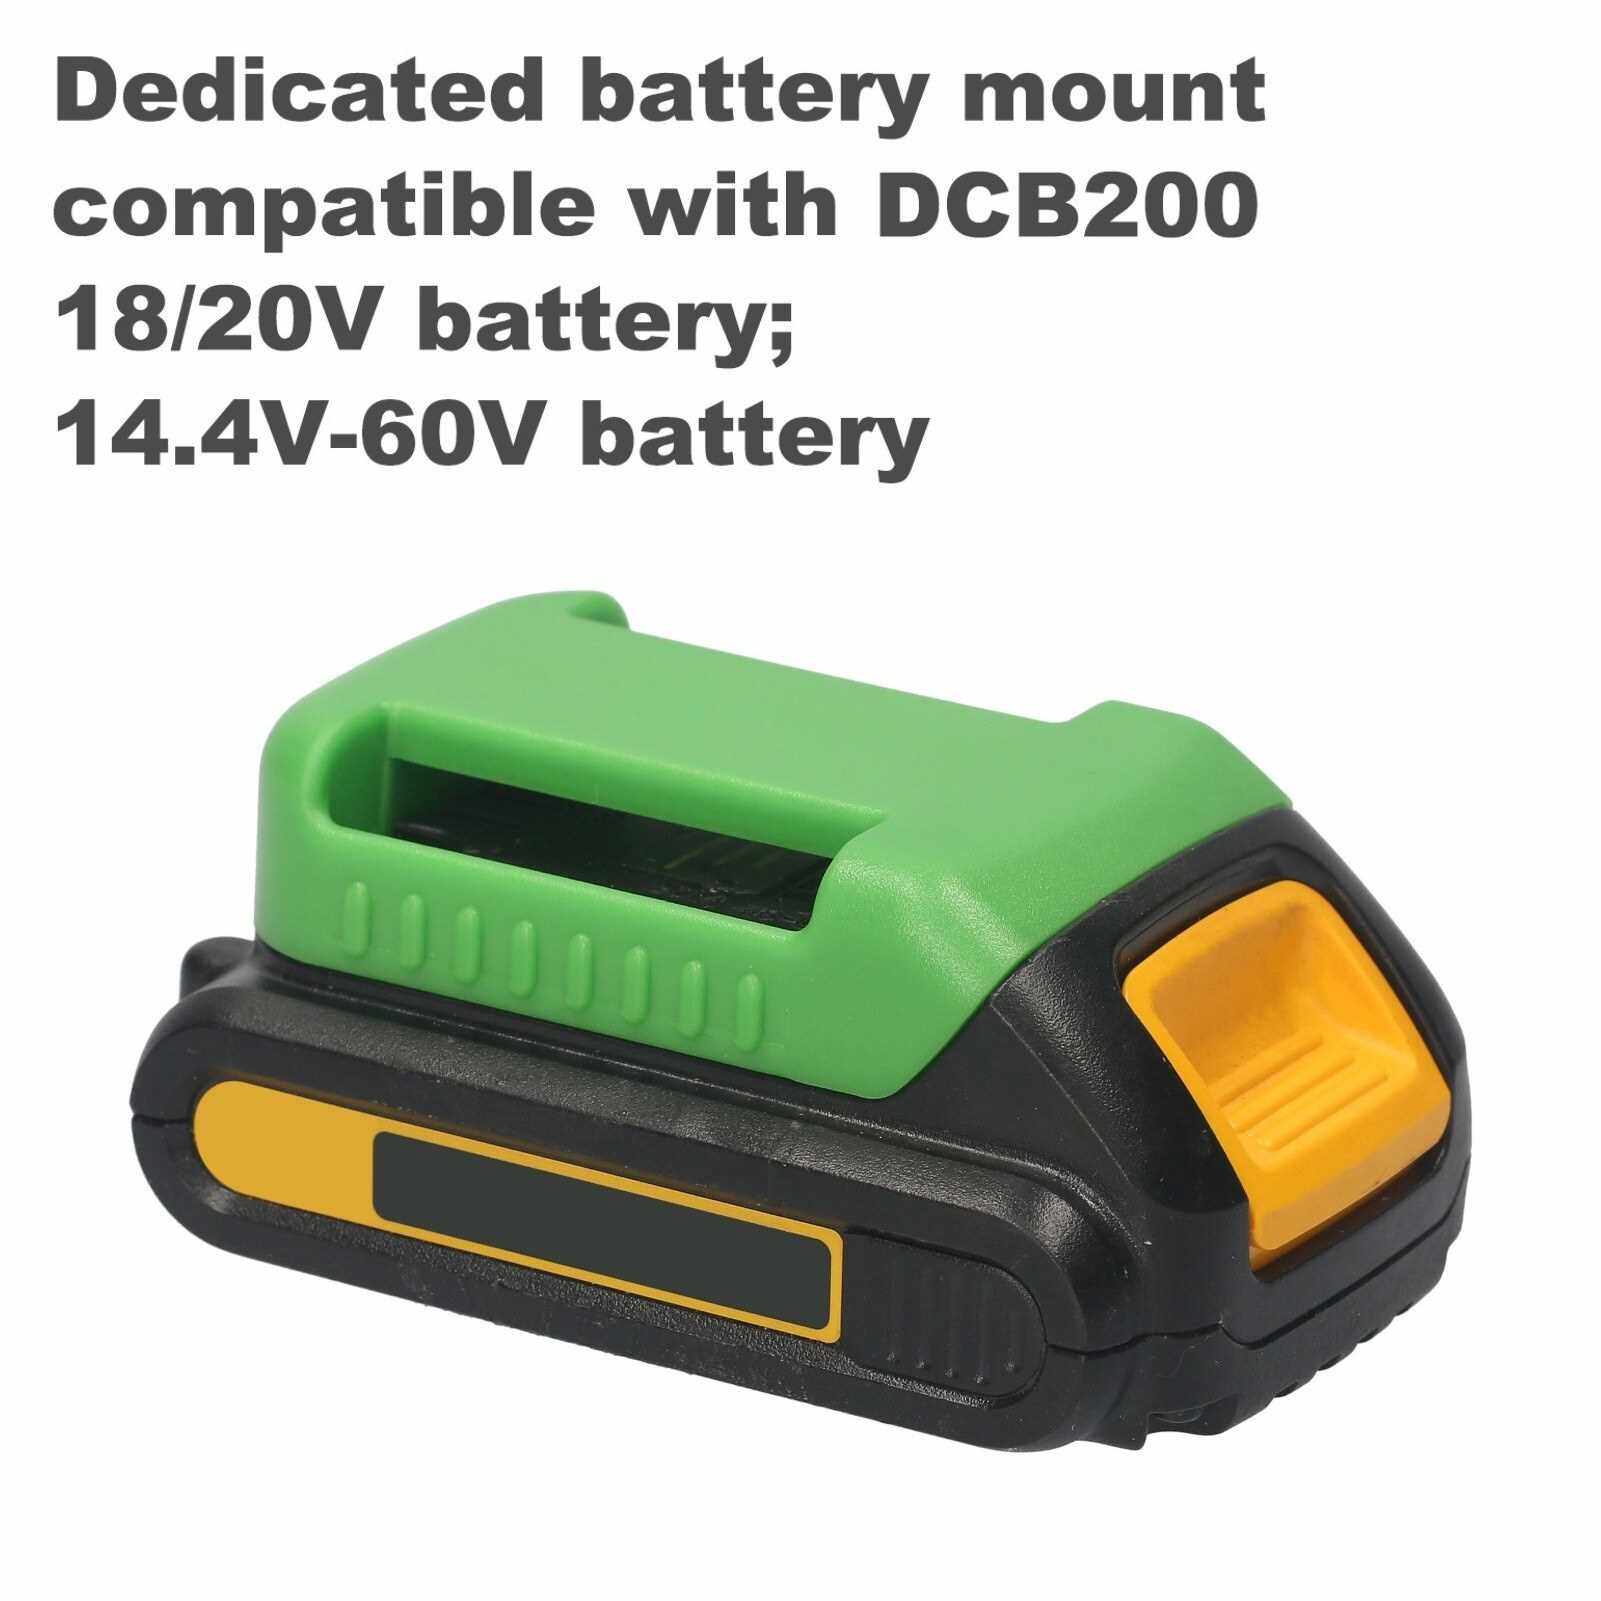 5pcs Lithium-Ion Batteries Storage Bracket Dedicated Battery Clip Battery Mount Dock Holder Replacement for DCB200 18/20V Battery 14.4V-60V Battery (Green)